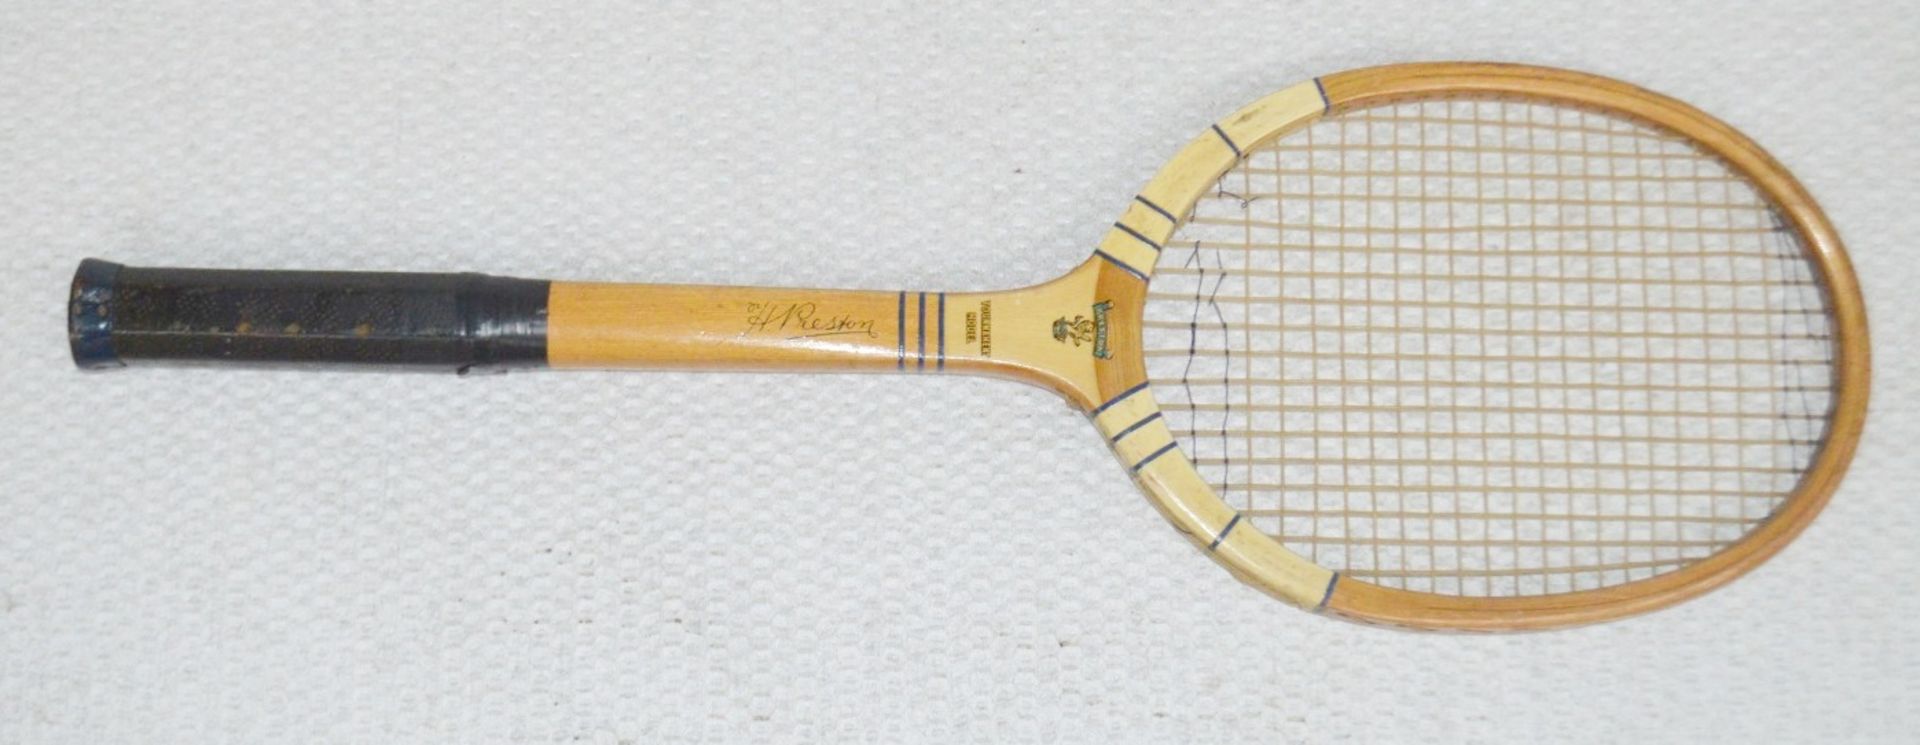 5 x Assorted Vintage Tennis Rackets - Ex-Display Props - Average Length: 69cm - Ref: HAR243 GIT - - Image 2 of 12